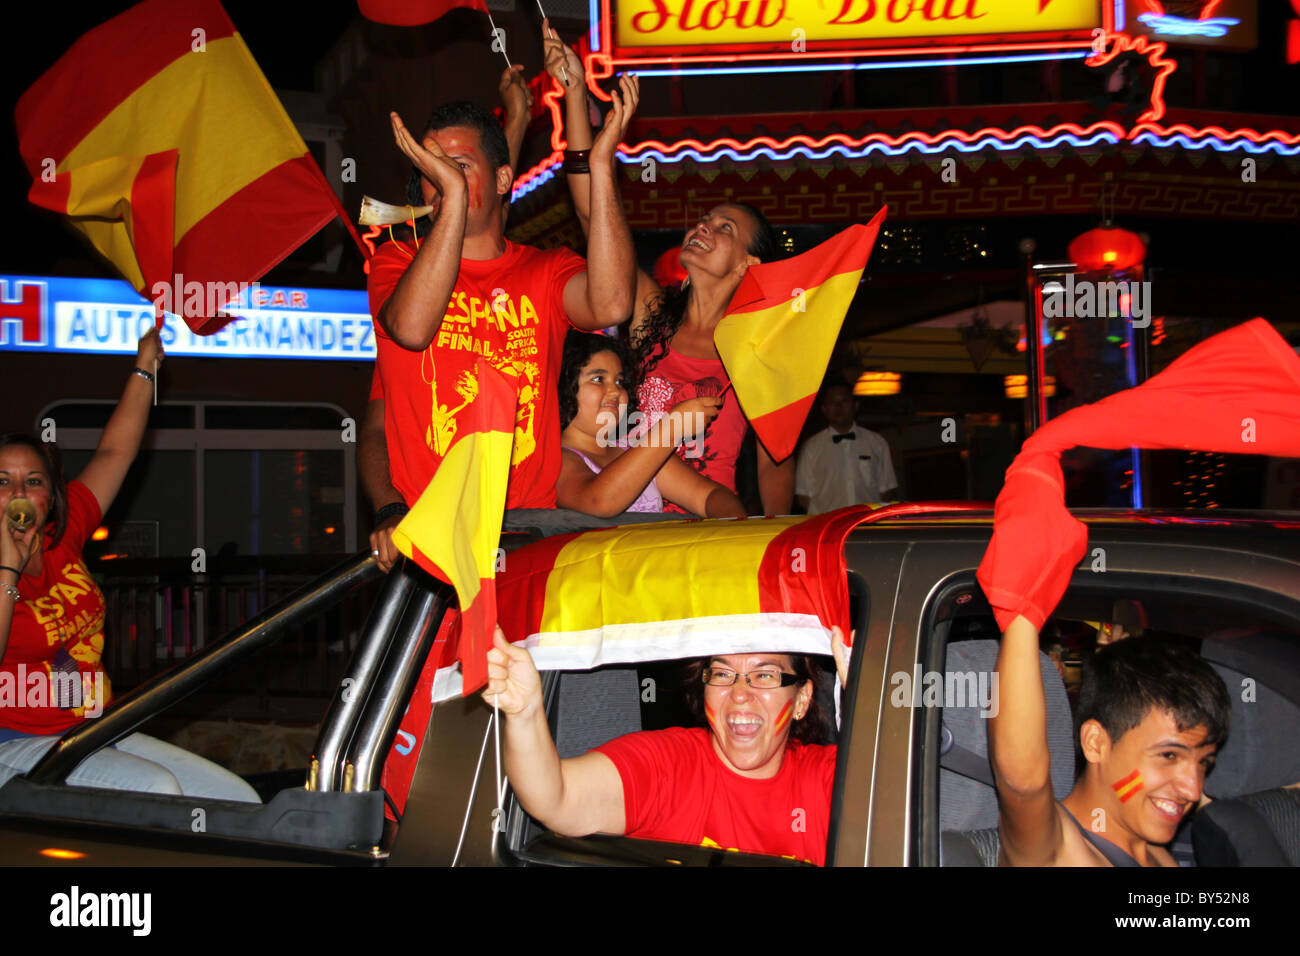 Spanish football fans celebrating Spain winning the World Cup 2010 Stock Photo